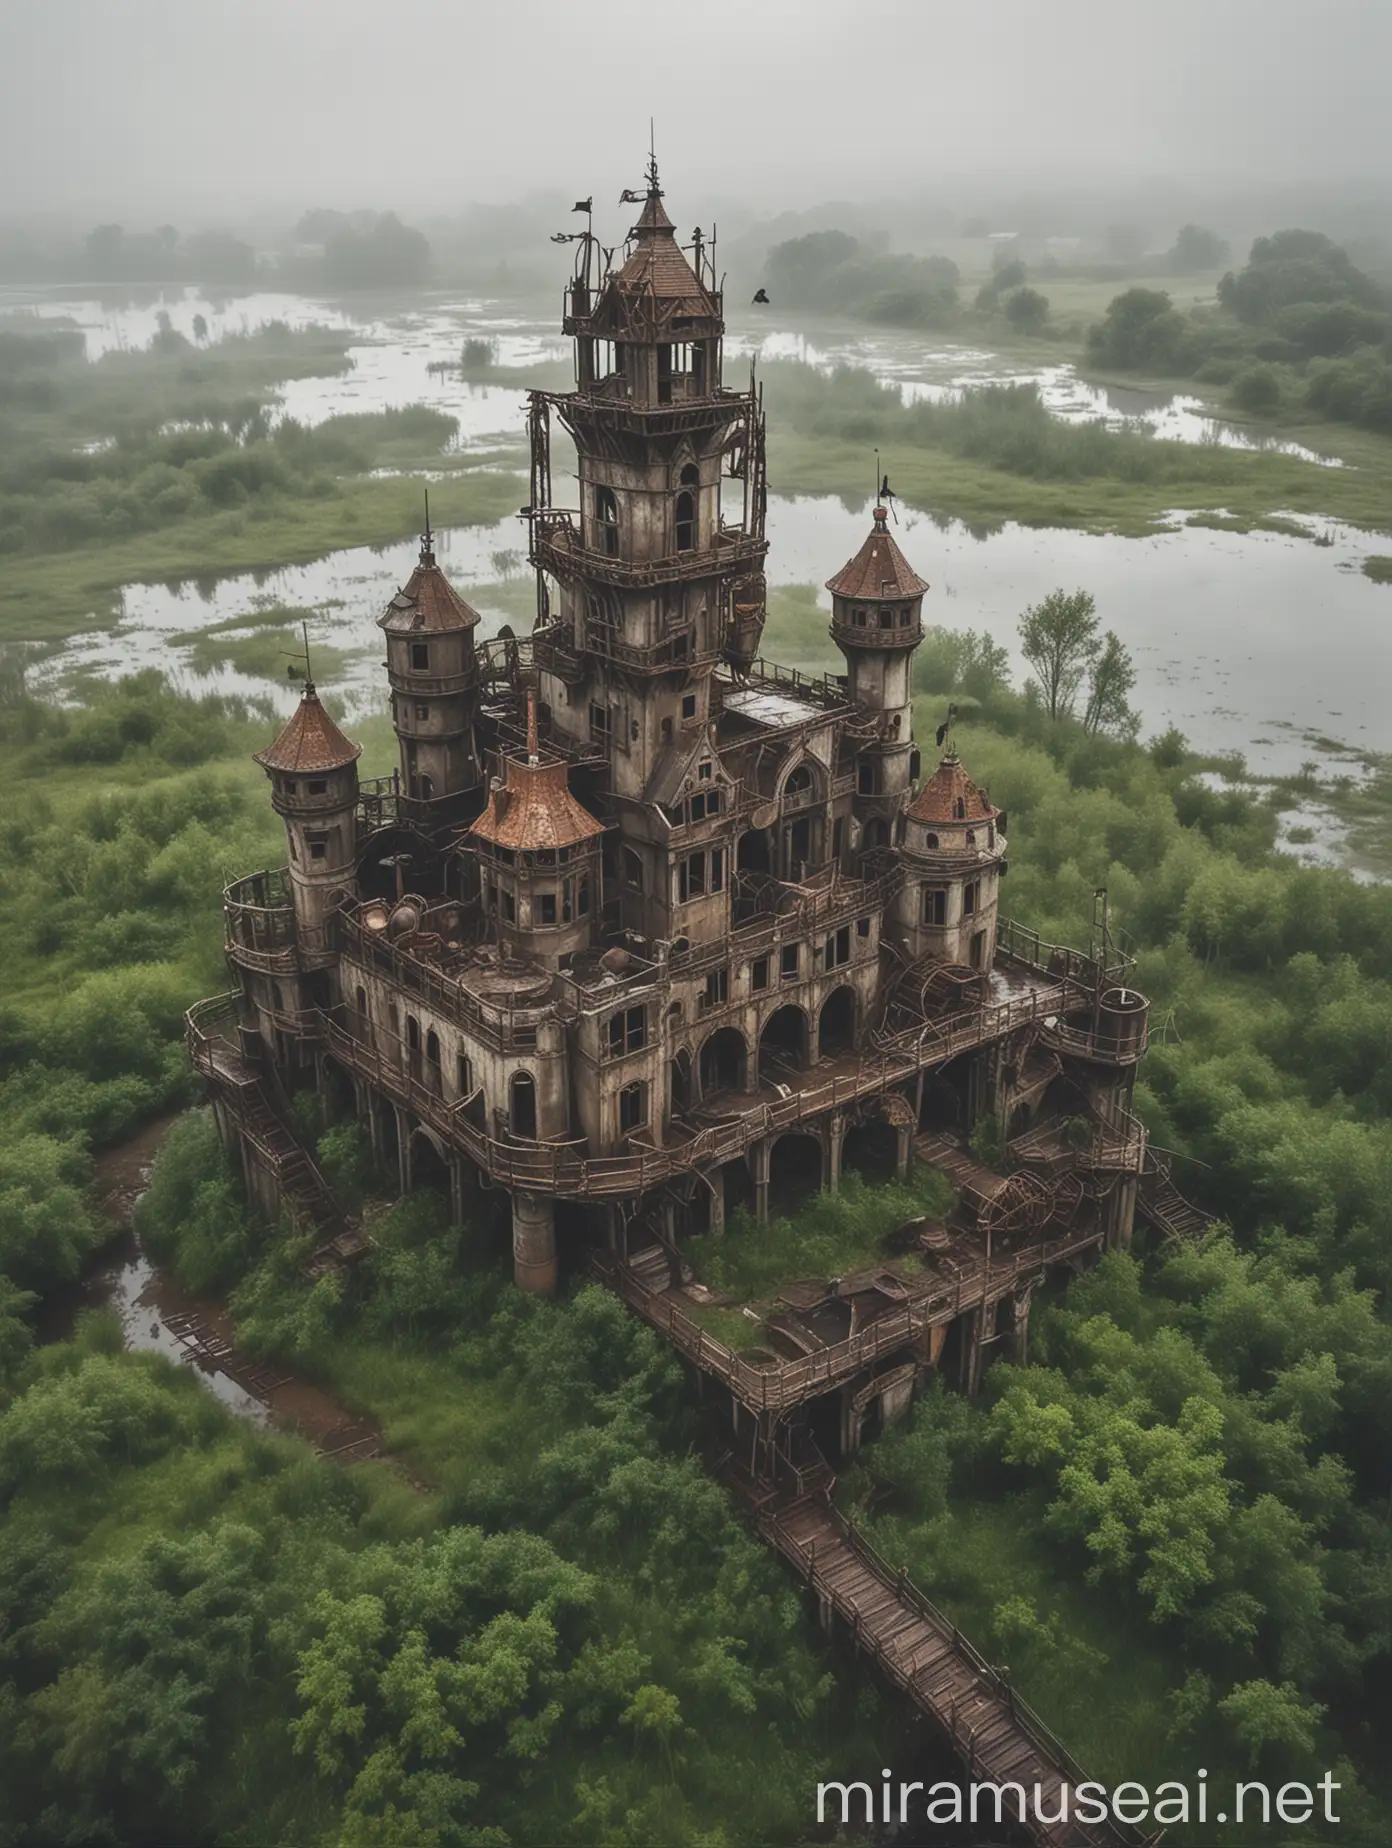 ruins of a steampunk castle on the verge of wetlands, cloudy, fog, rain, bird's eye view